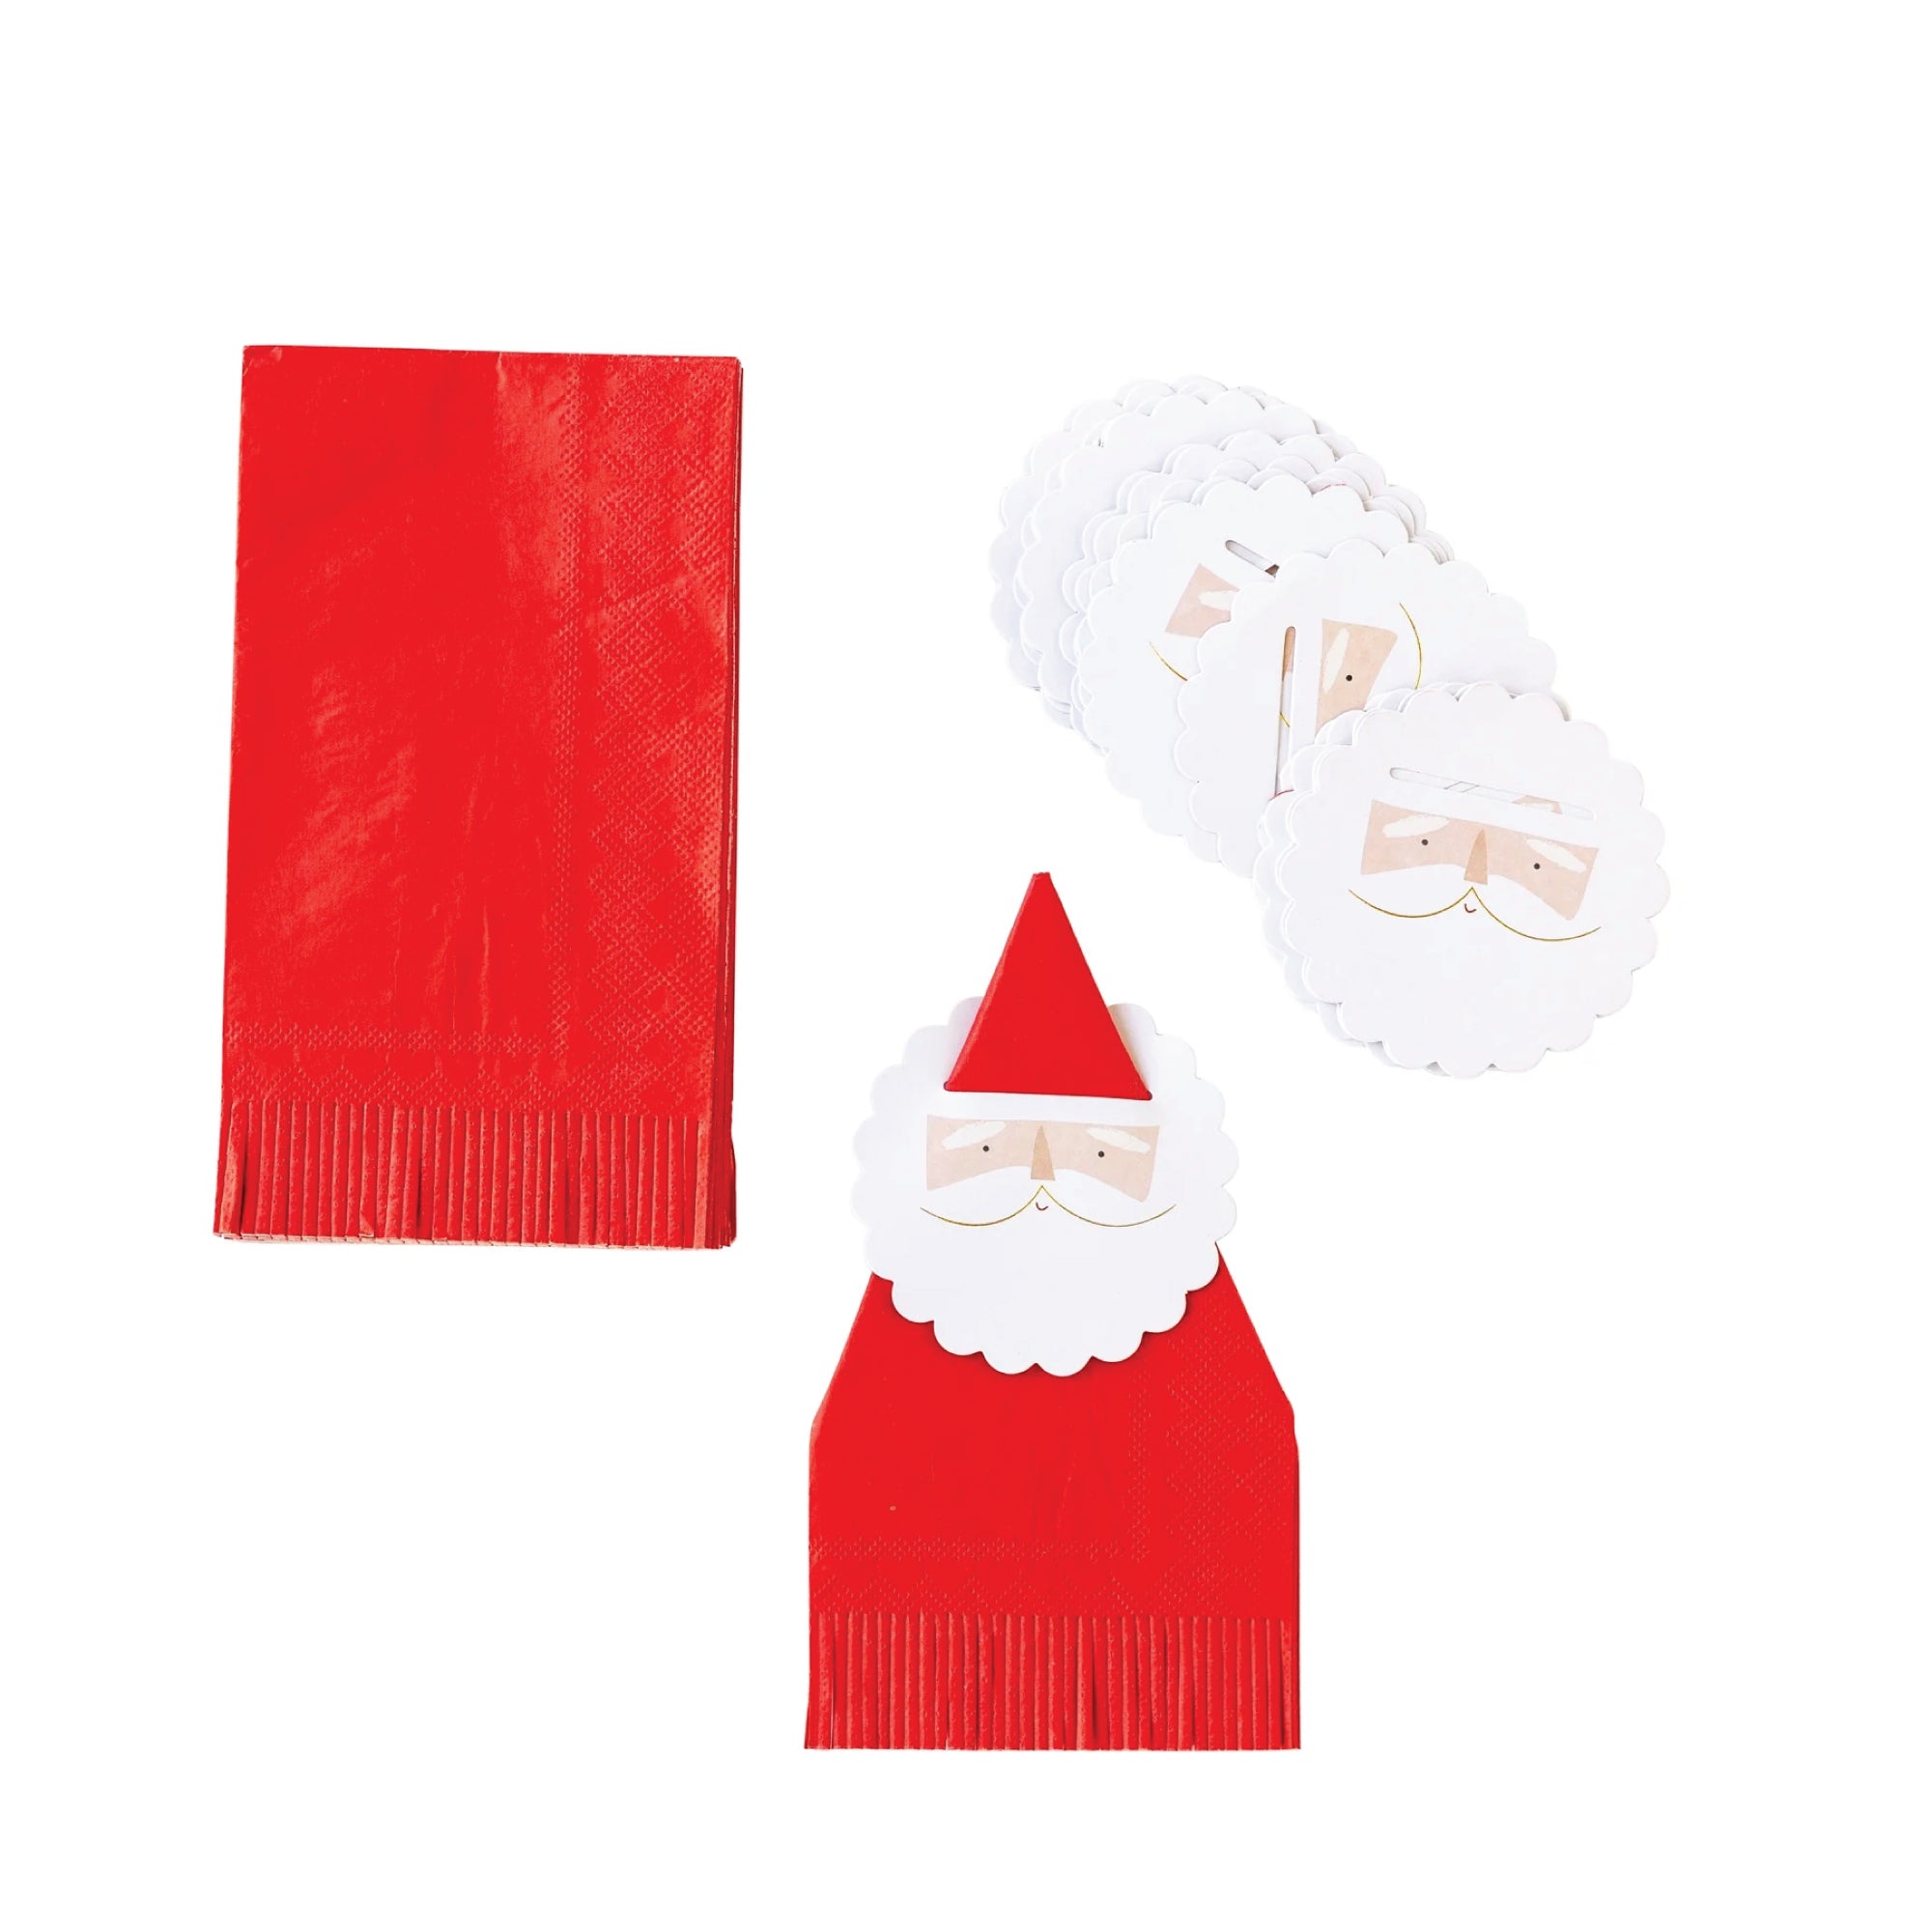 https://cdn.shopify.com/s/files/1/1449/4112/files/red-fringe-paper-guest-towels-santa-napkin-ring_2000x.jpg?v=1699457056